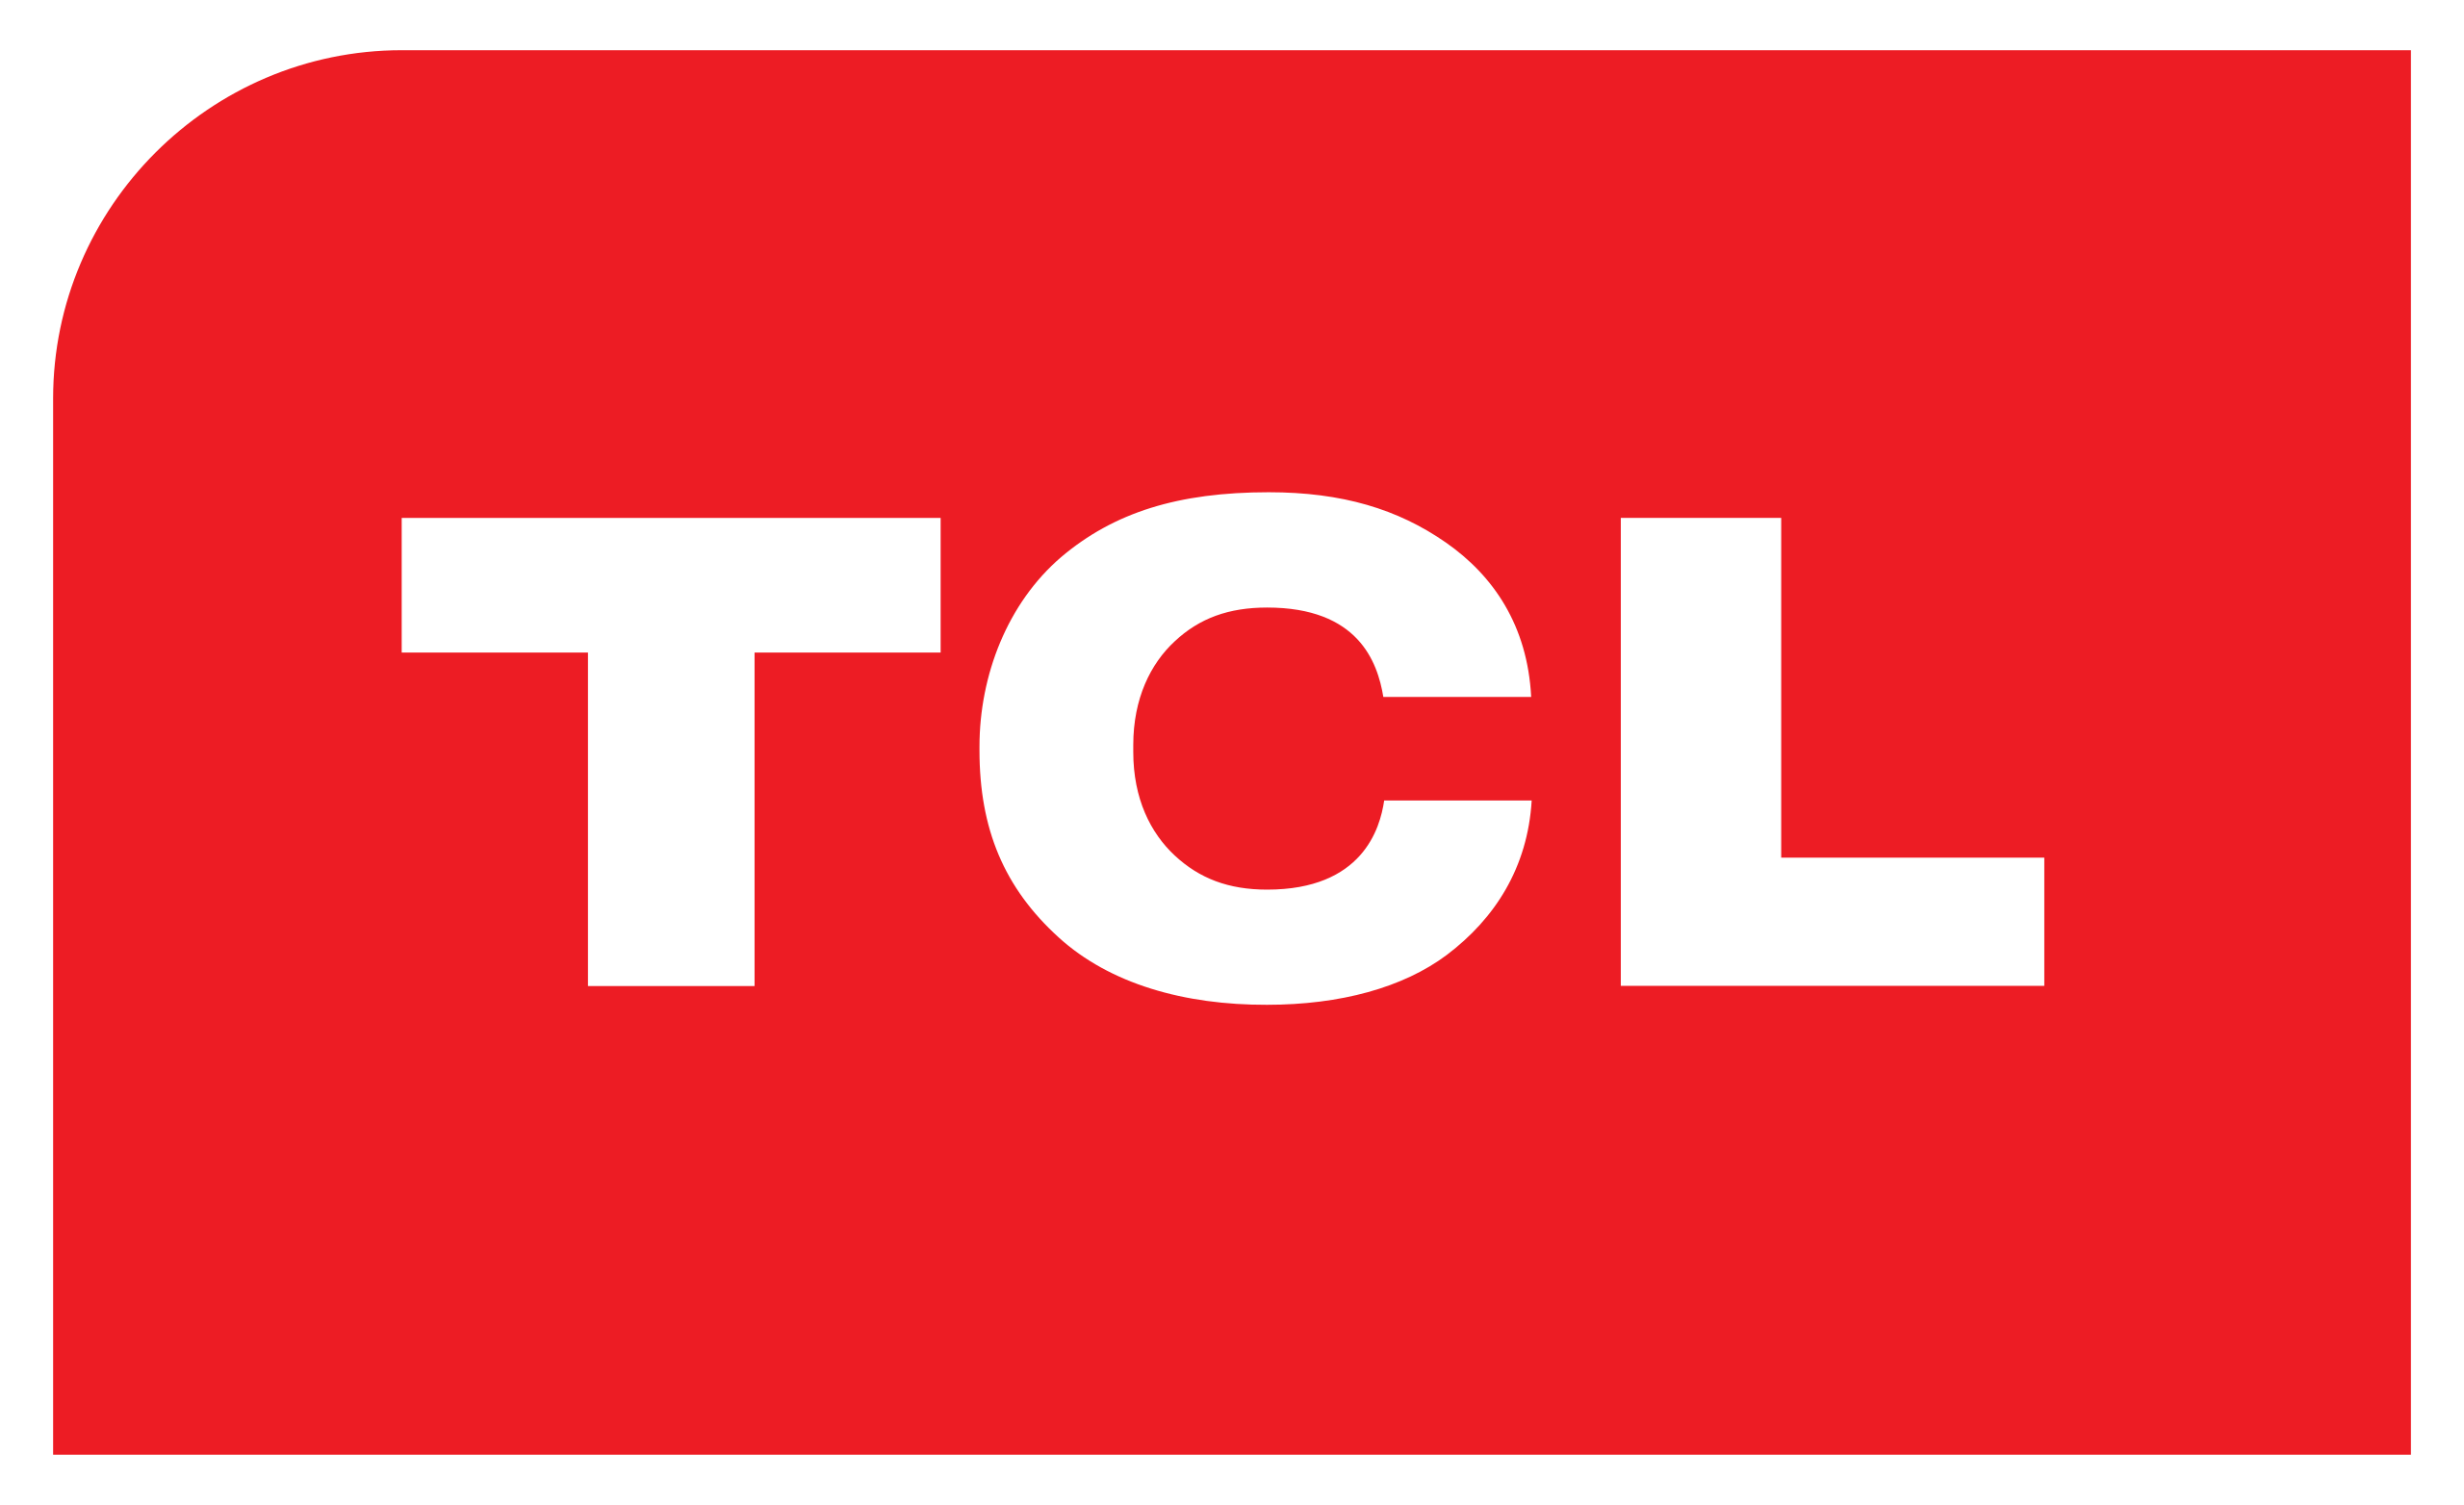 TCL Technology